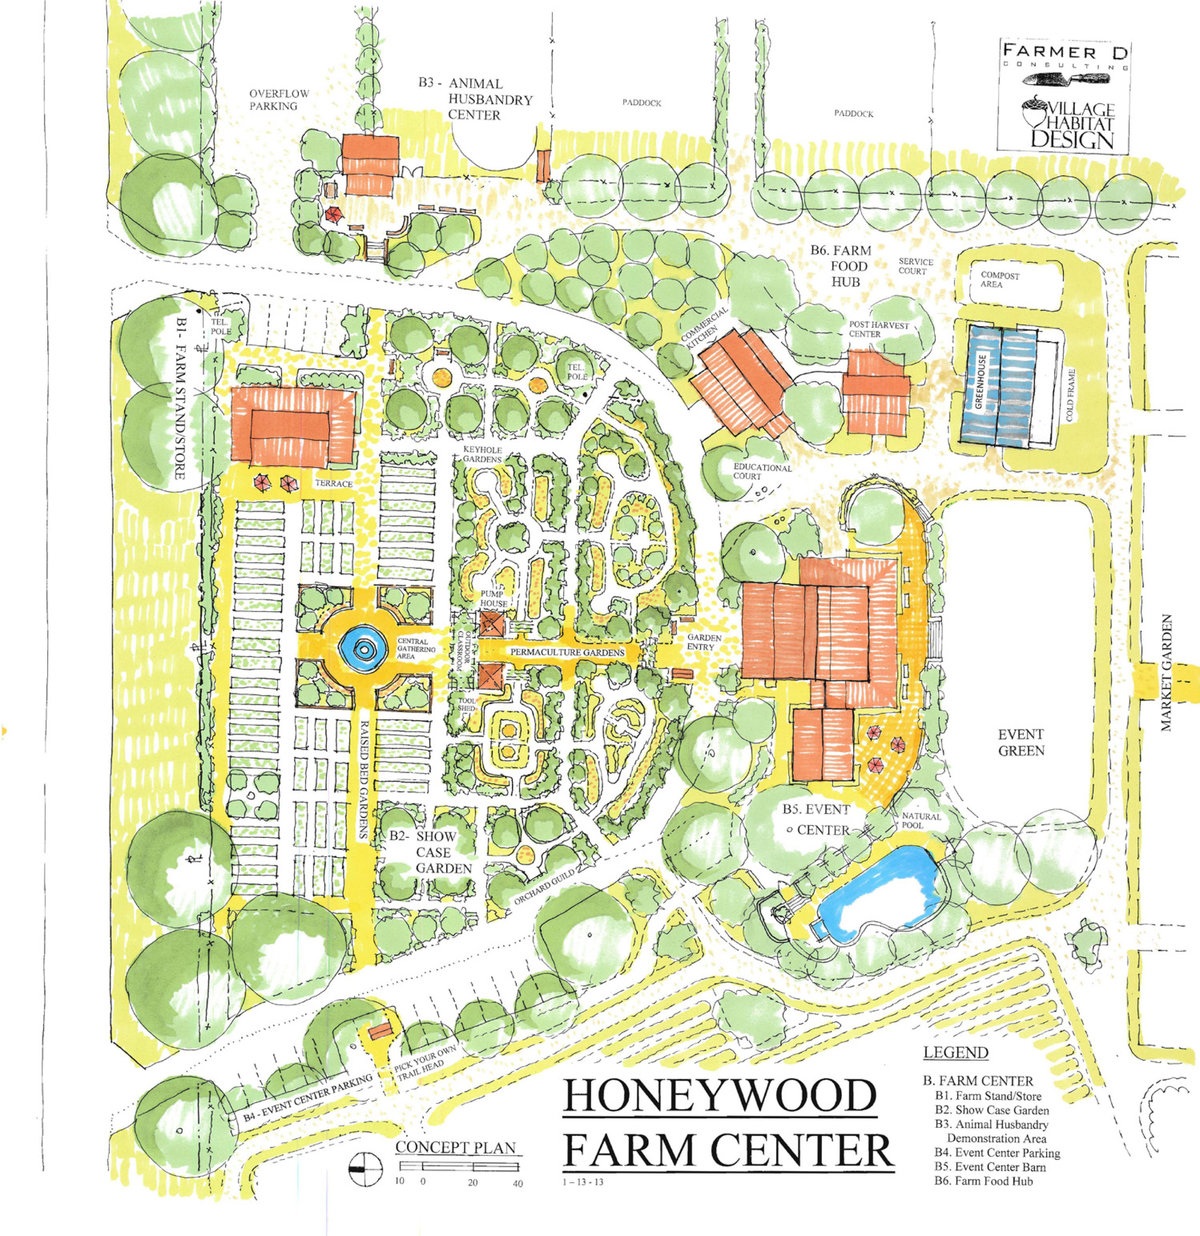 Honeywood Farm Center